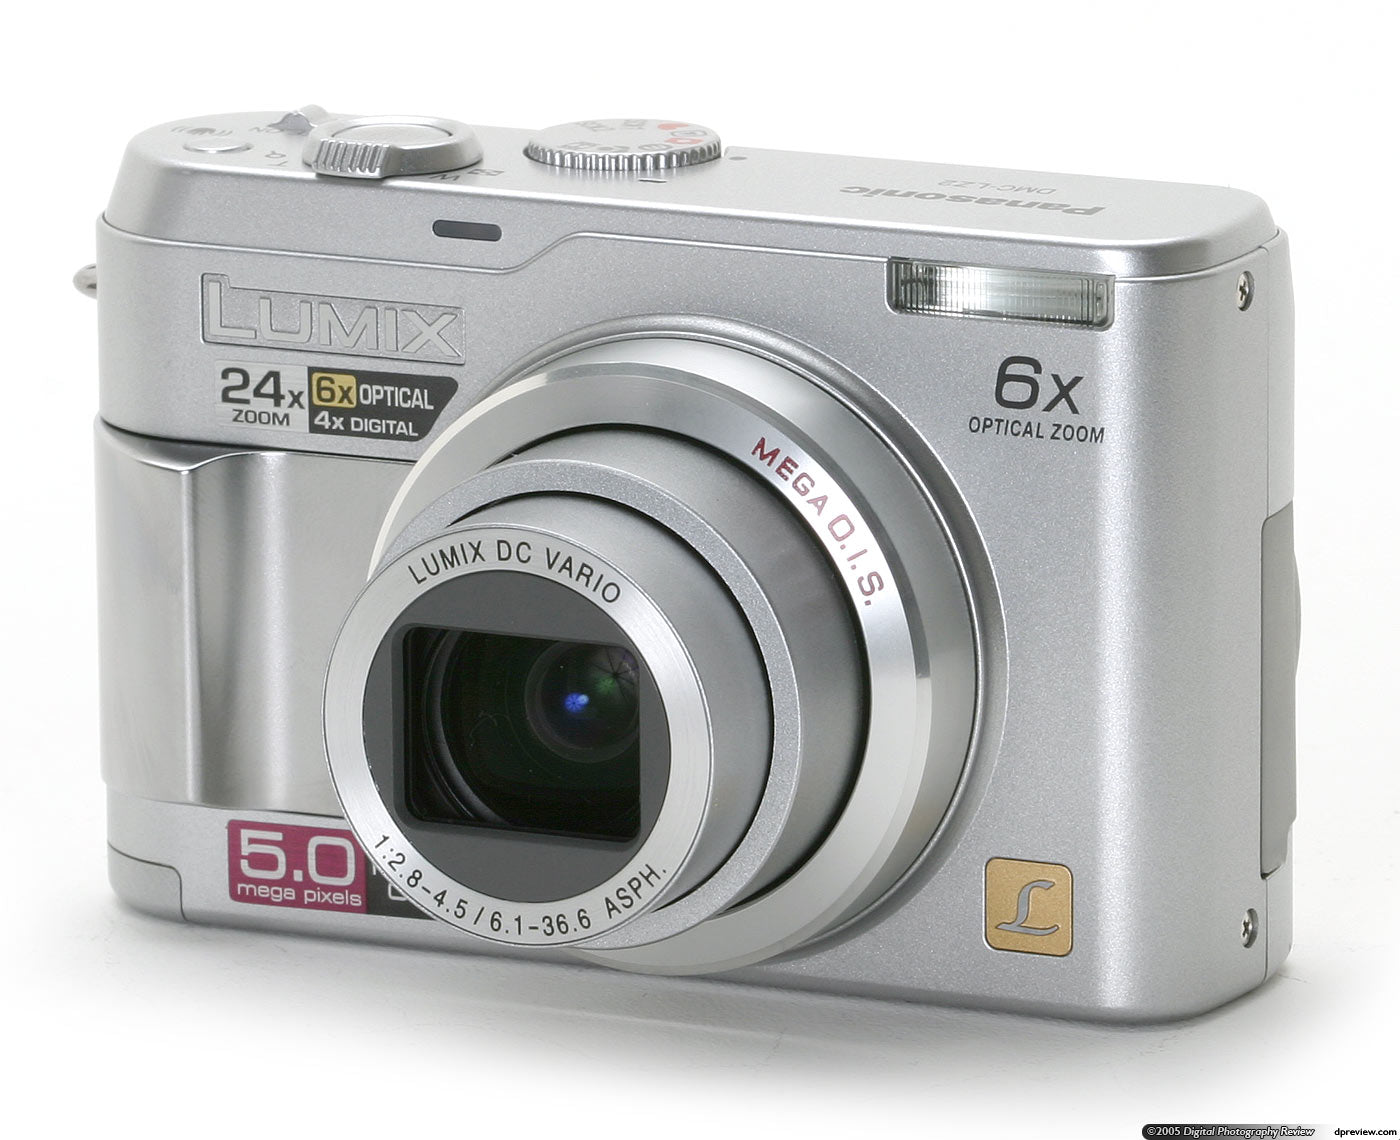 Panasonic Lumix Dmc-lz2 5.0MP Digital Camera - Silver